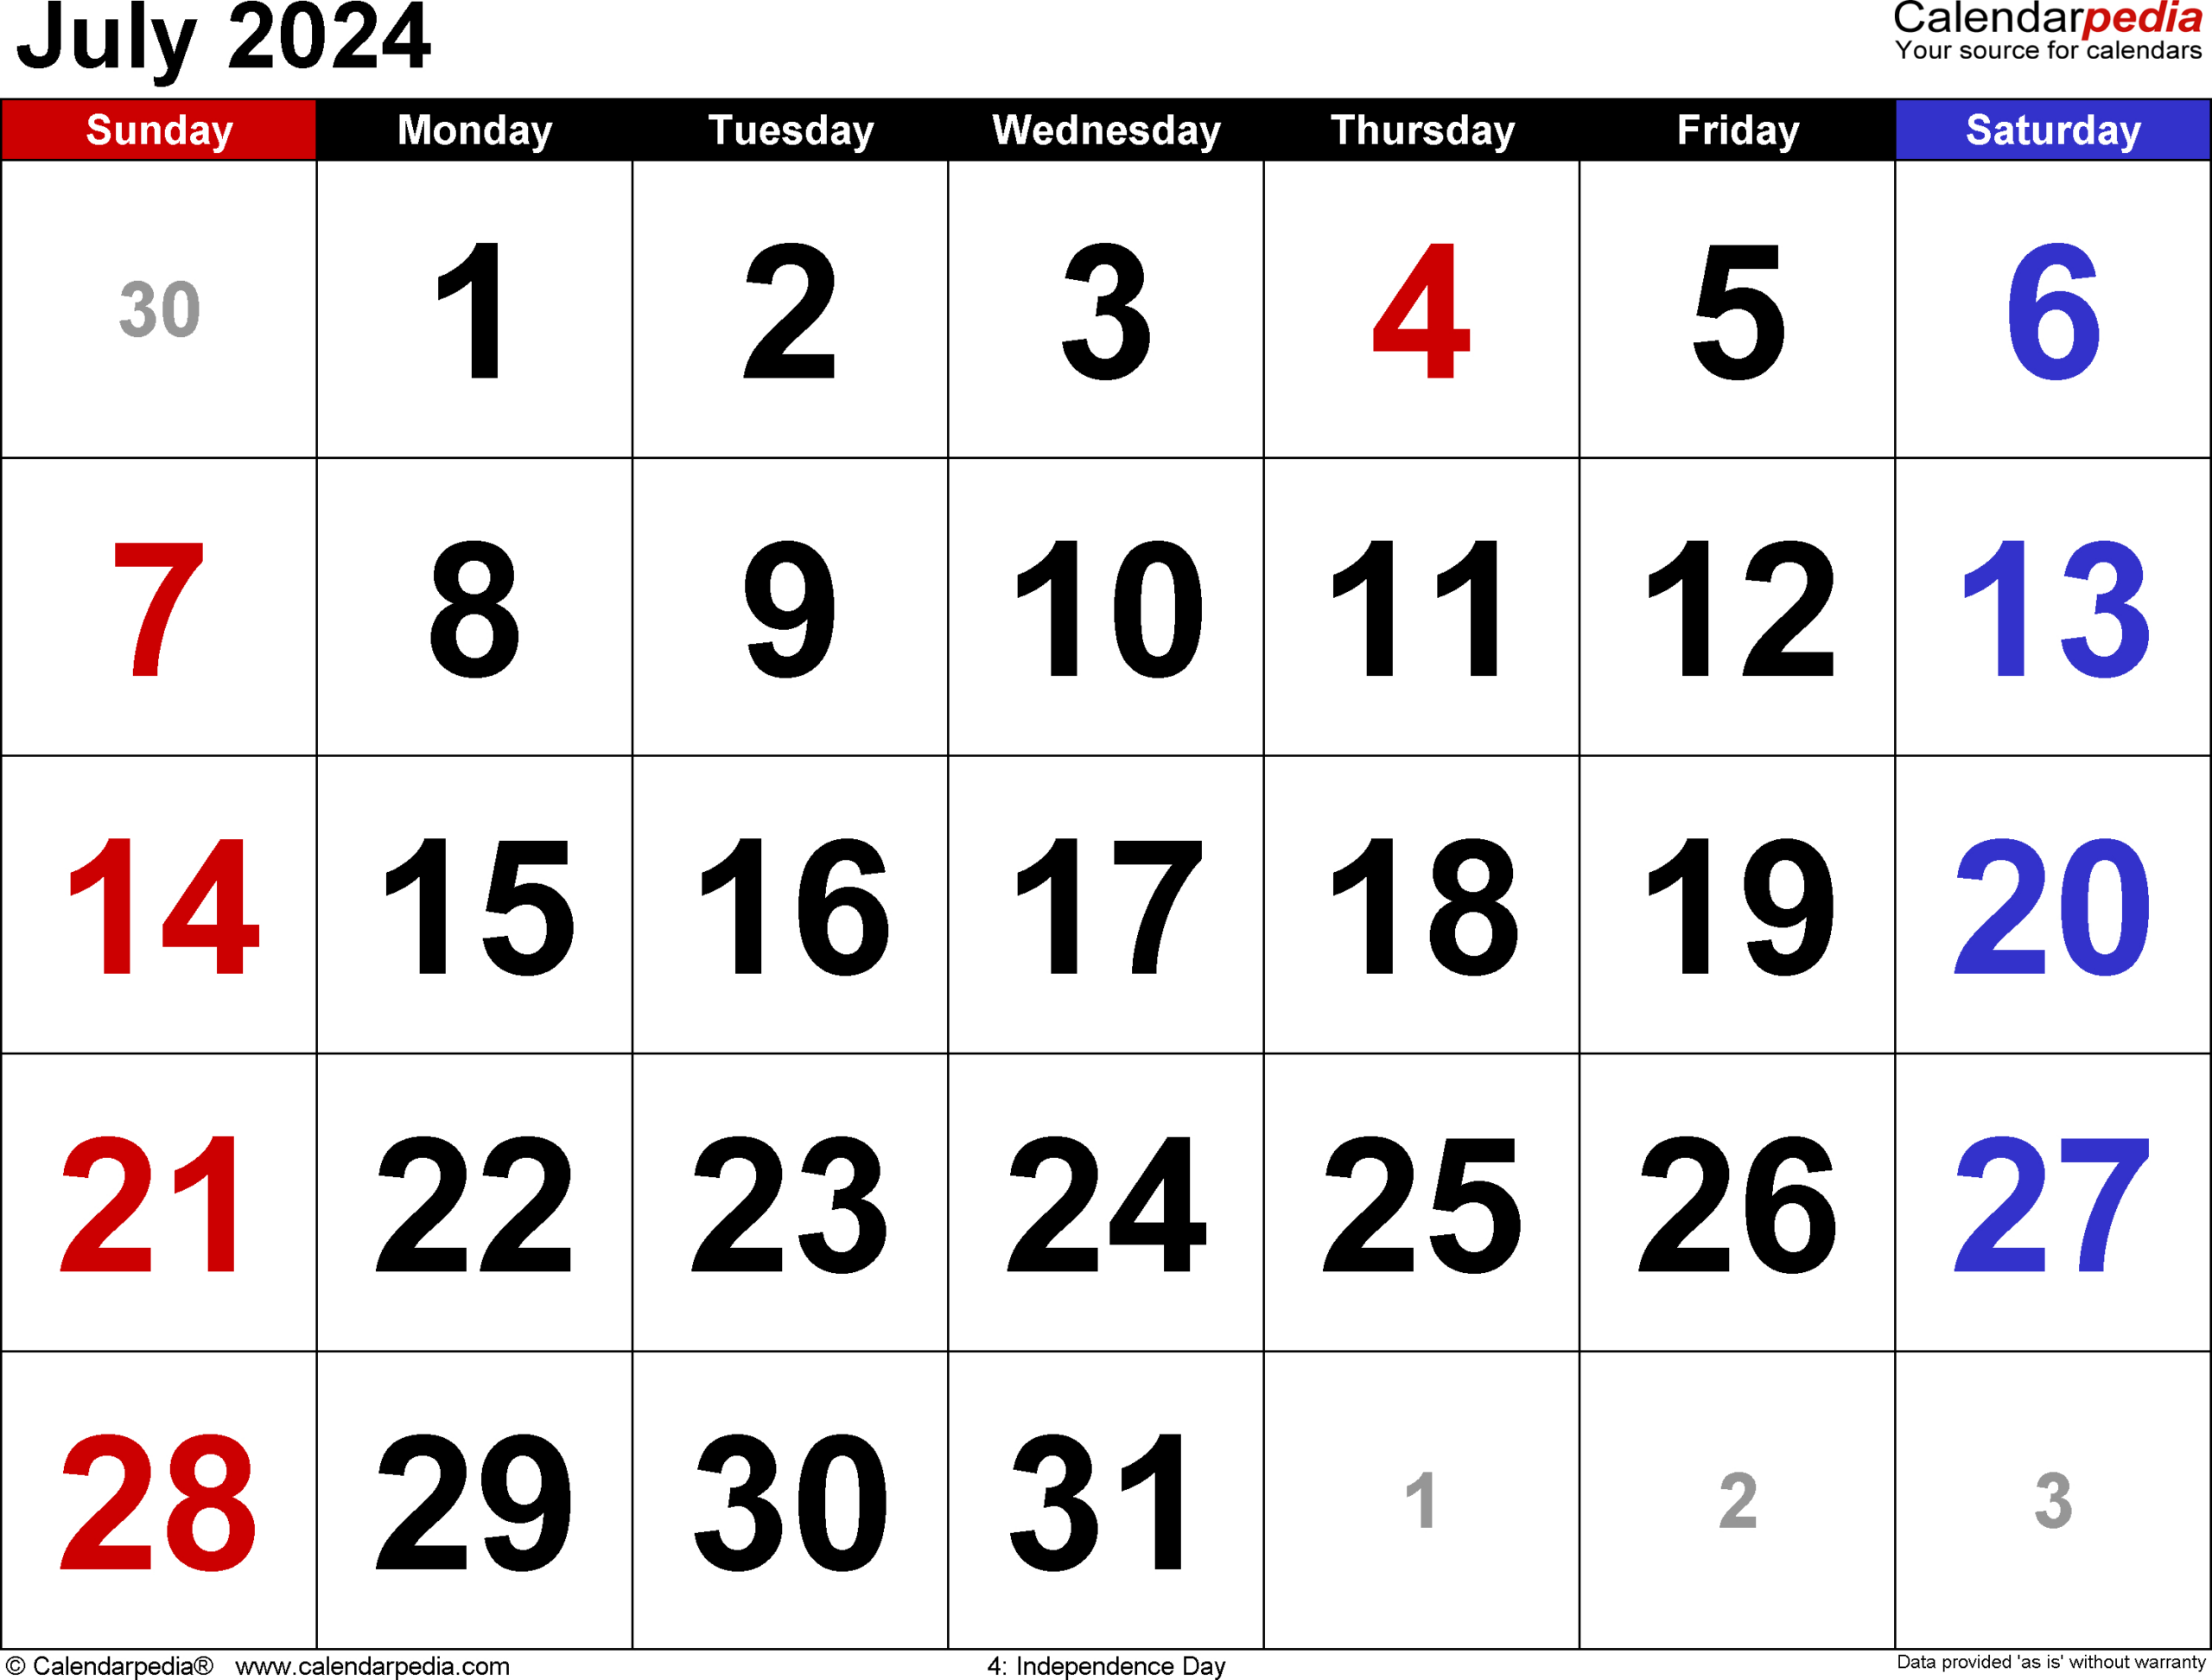 July 2024 Calendar | Templates For Word, Excel And Pdf regarding 6 July 2024 Calendar Printable